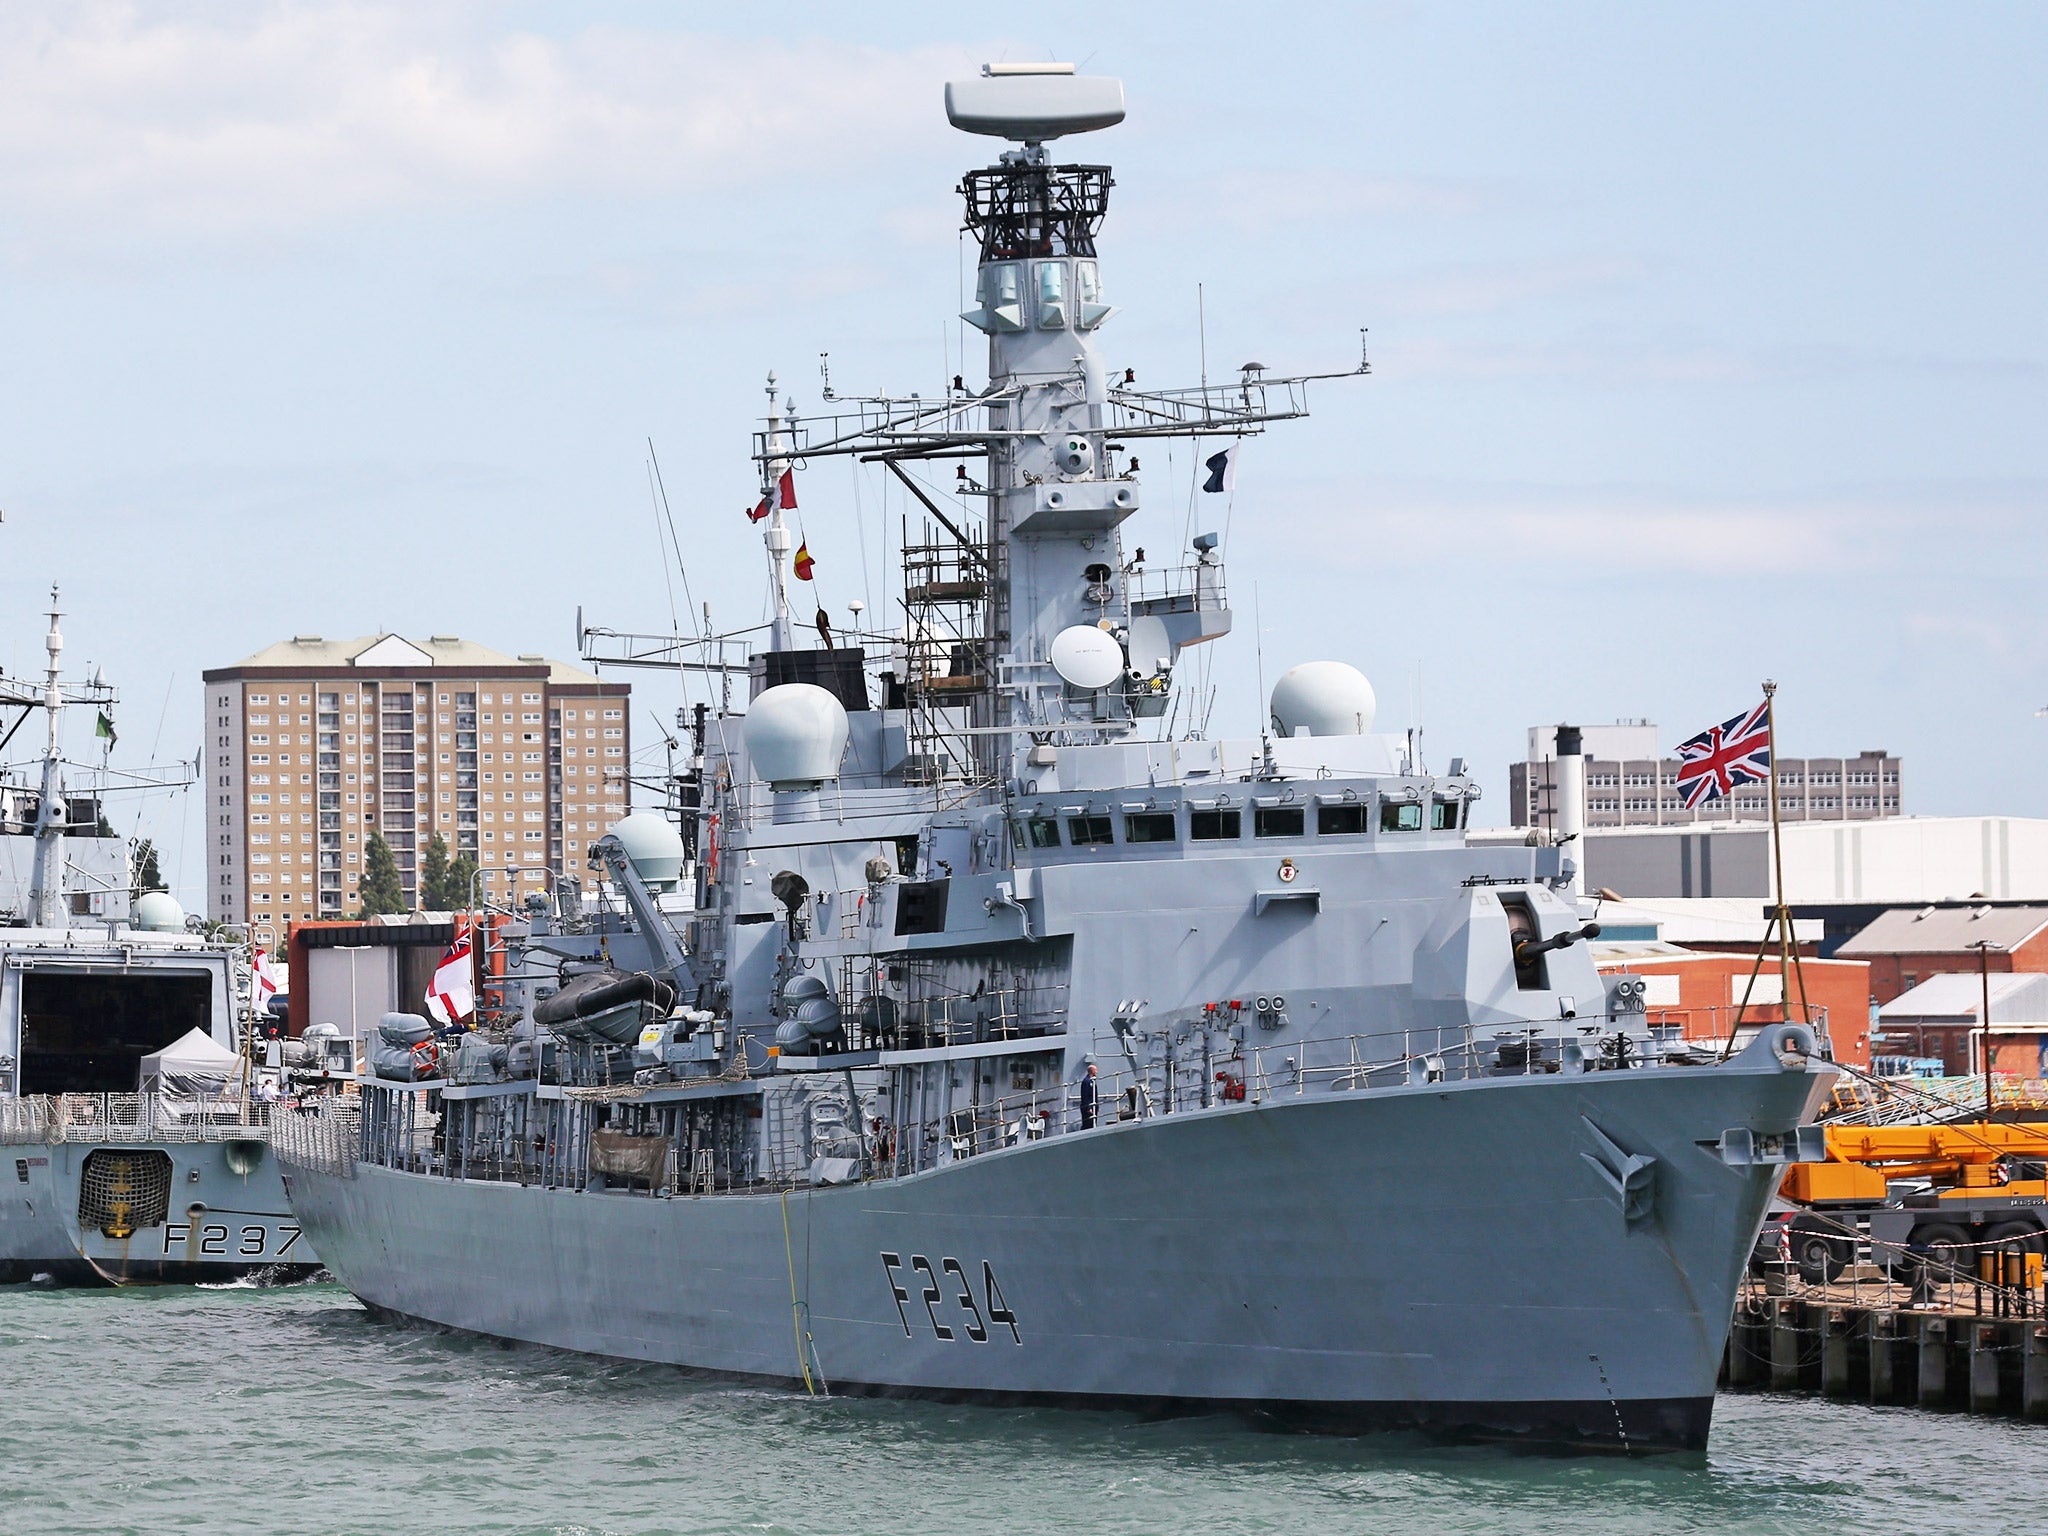 HMS Iron Duke, moored in Portsmouth Naval Base